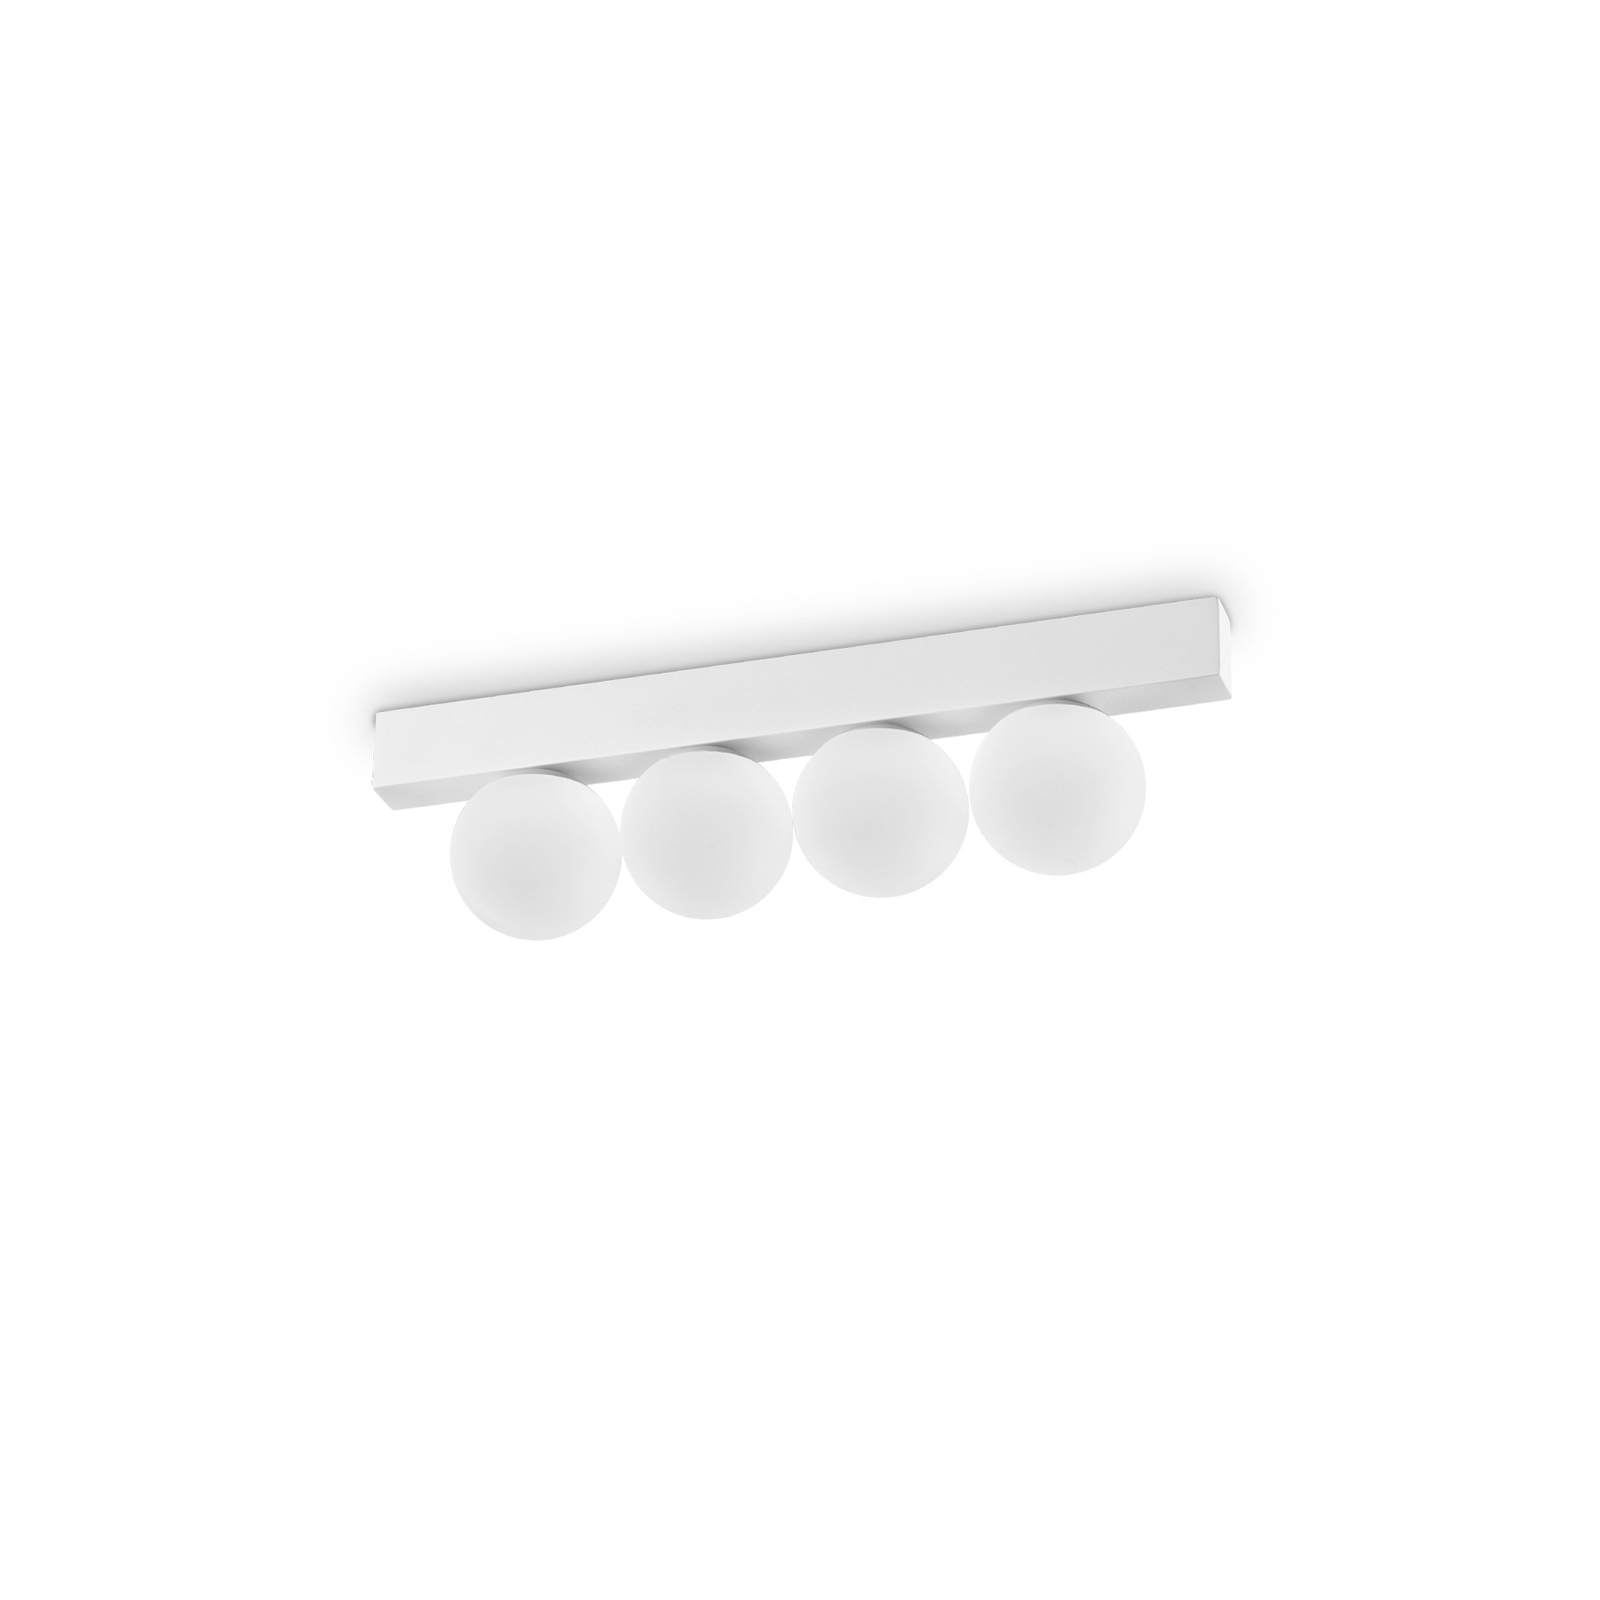 Stropné svietidlo Ideal Lux LED Ping Pong biele 4-svetelné, opálové sklo